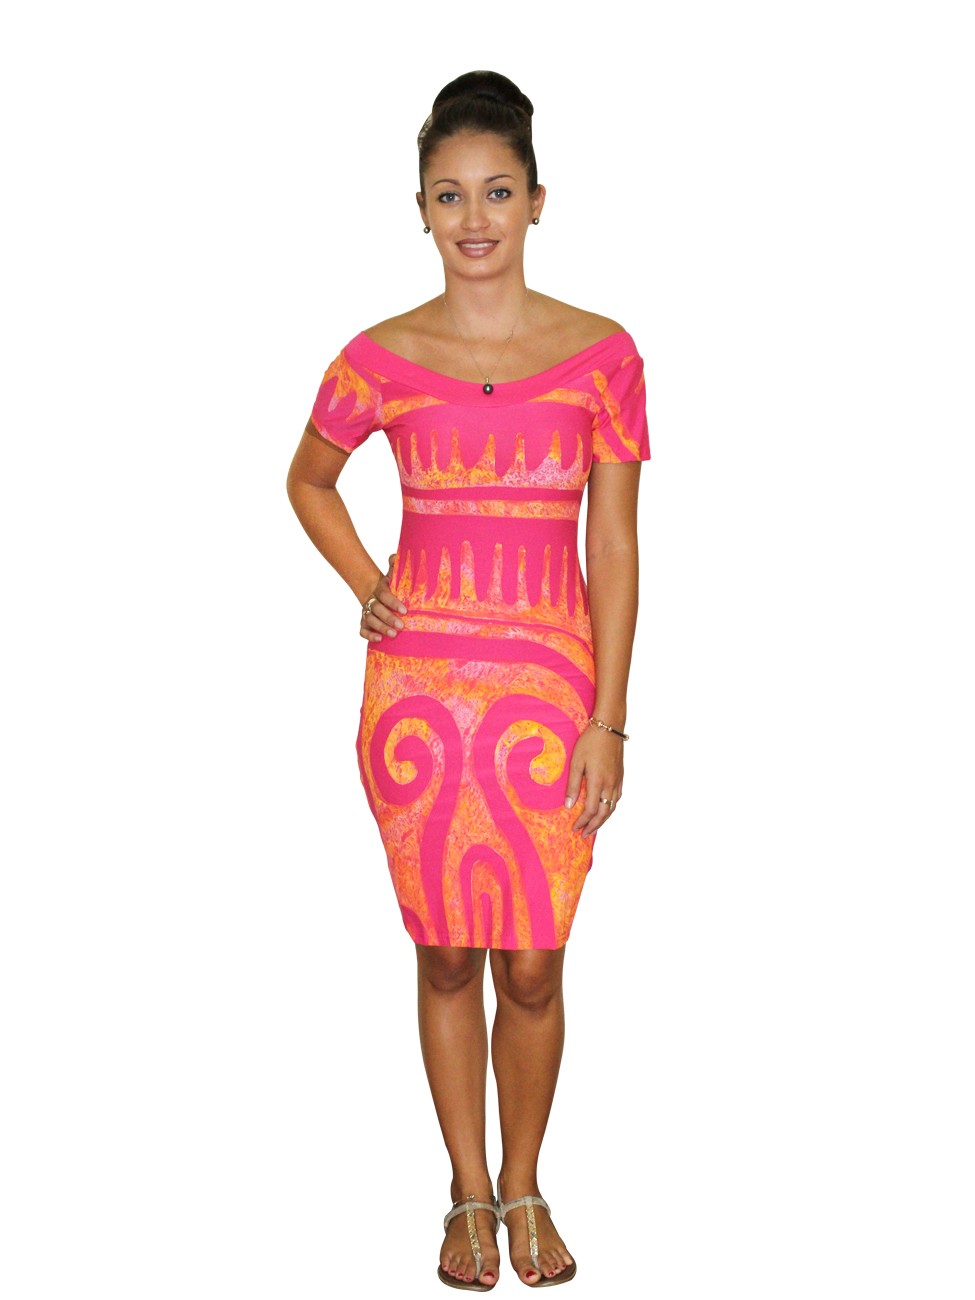 Платье island. Платье из лайкры. Платья Исланд. Пацифик платье. Tahiti платье розовое.